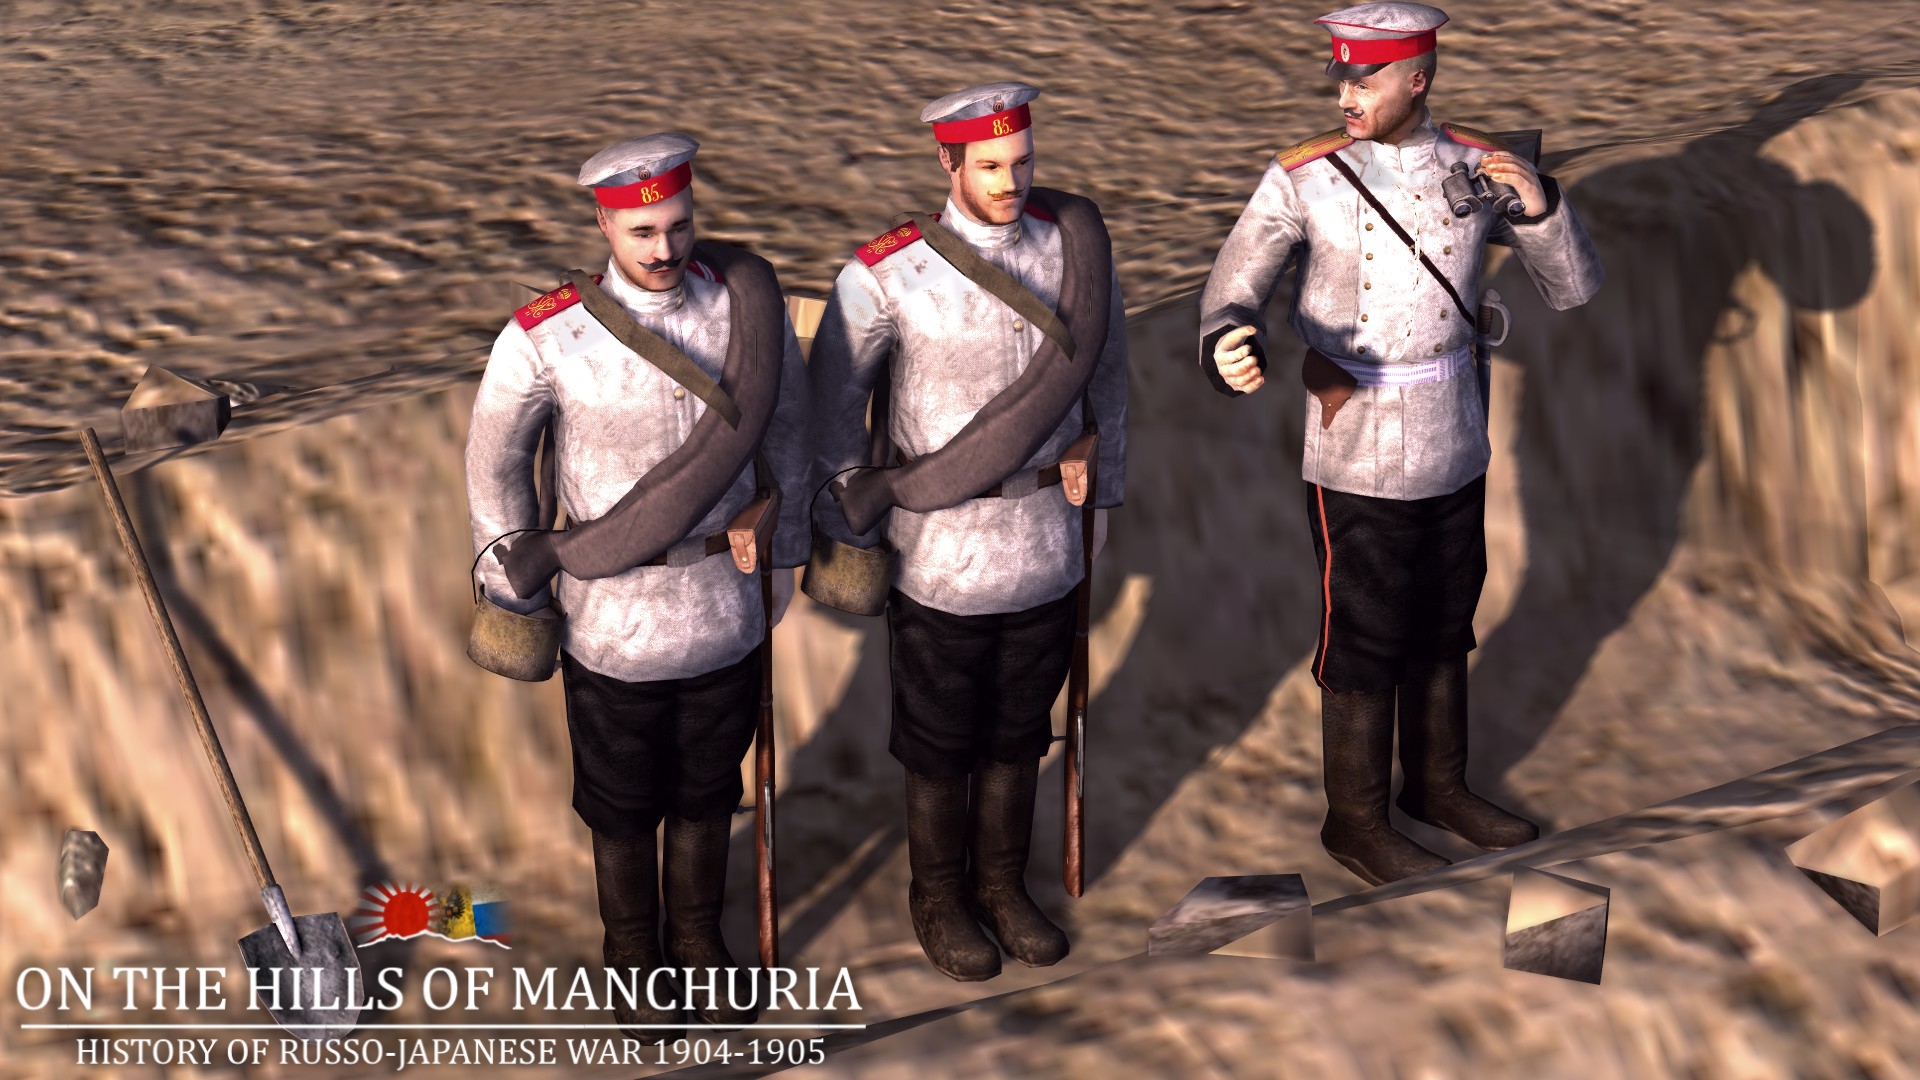 Russo Japanese War Uniforms